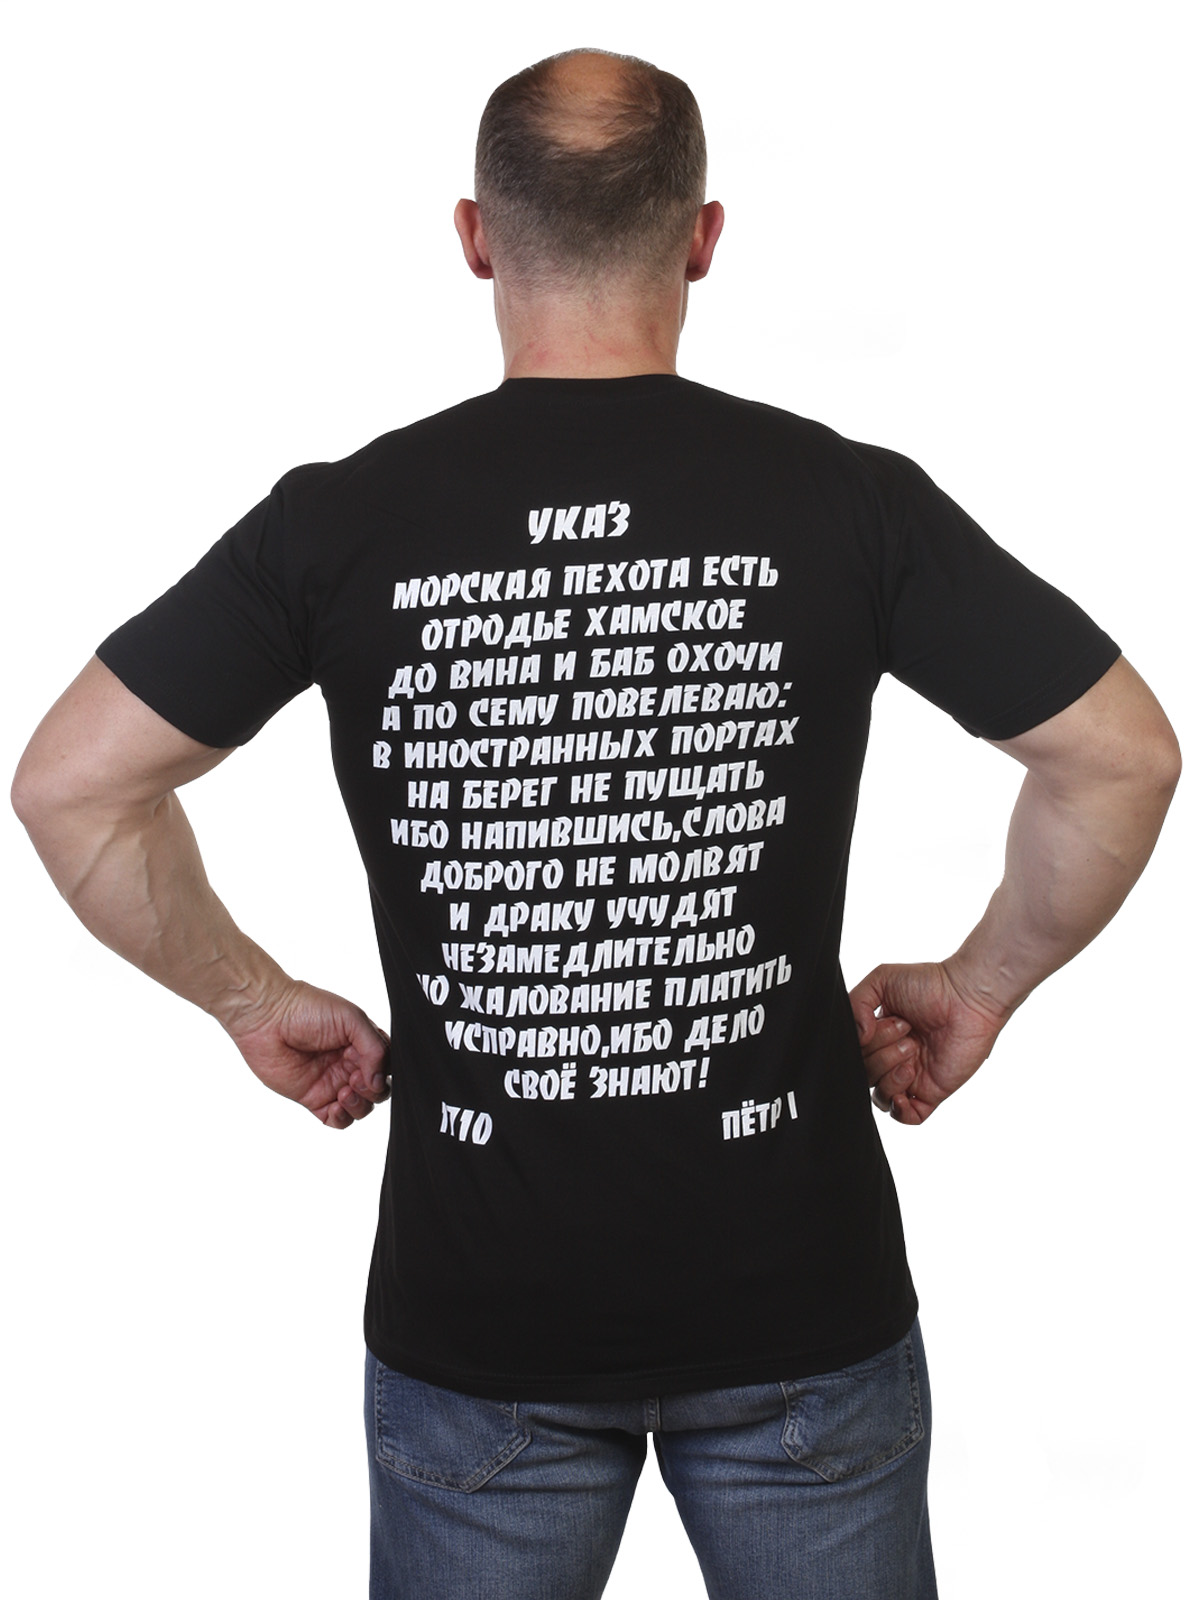 Заказать футболки Морпеха оптом недорого в военторге Военпро